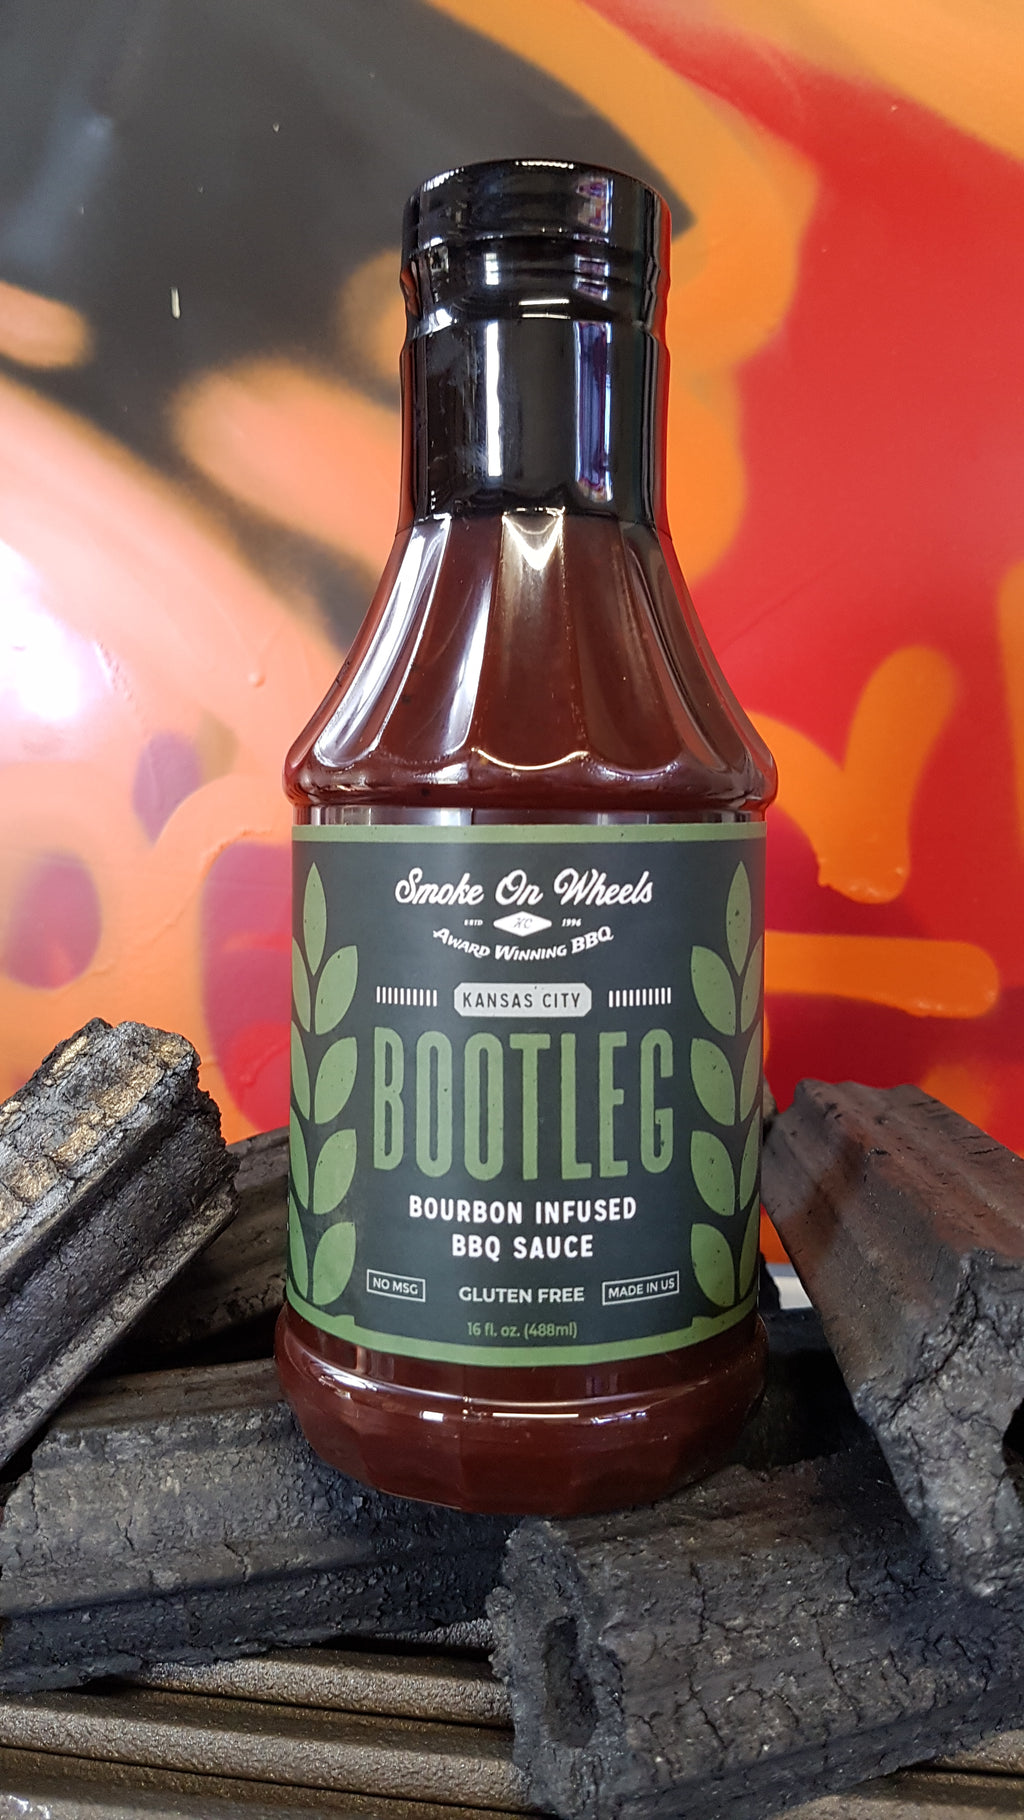 Bootleg Bourbon Infused BBQ Sauce 488ml by Smoke On Wheels